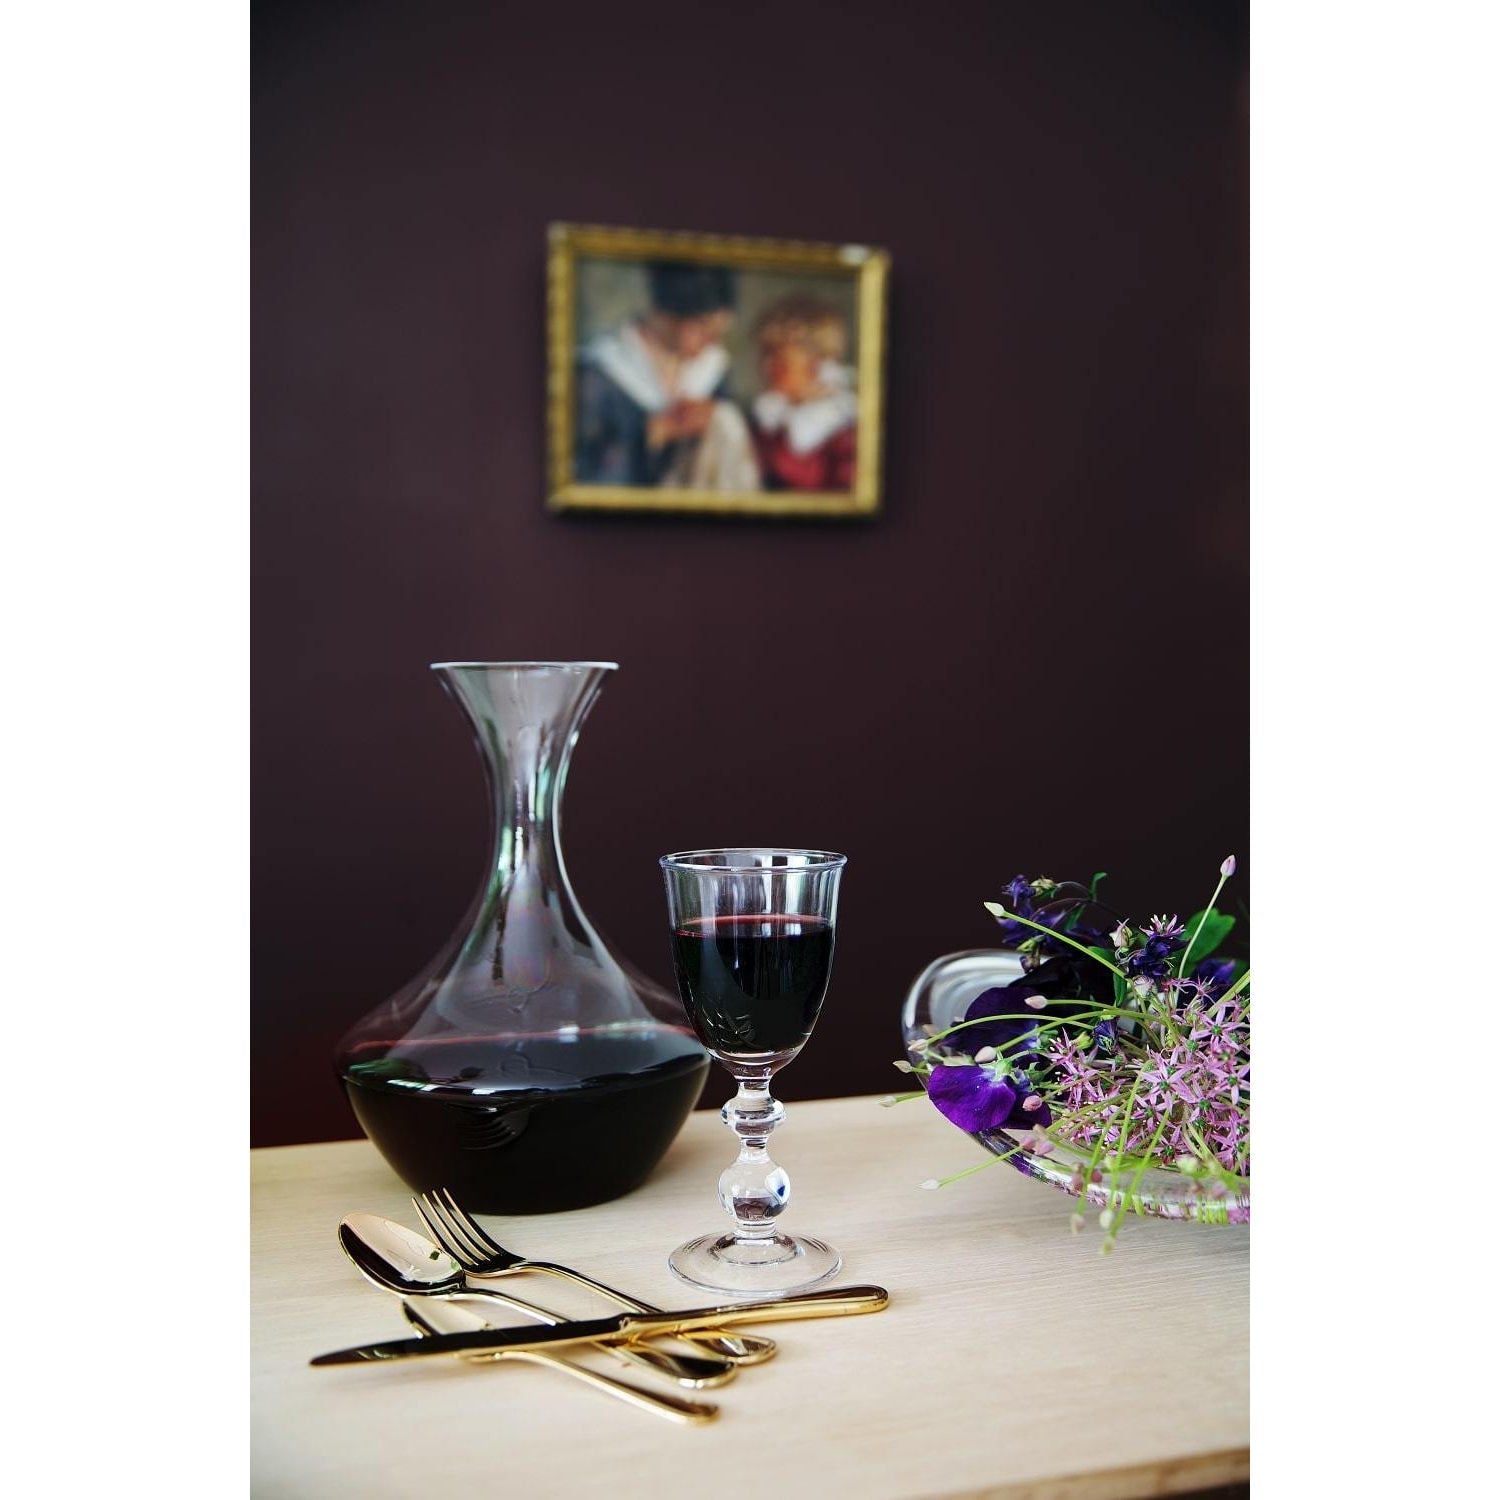 Holmegaard Charlotte Amalie Red Wine Glass